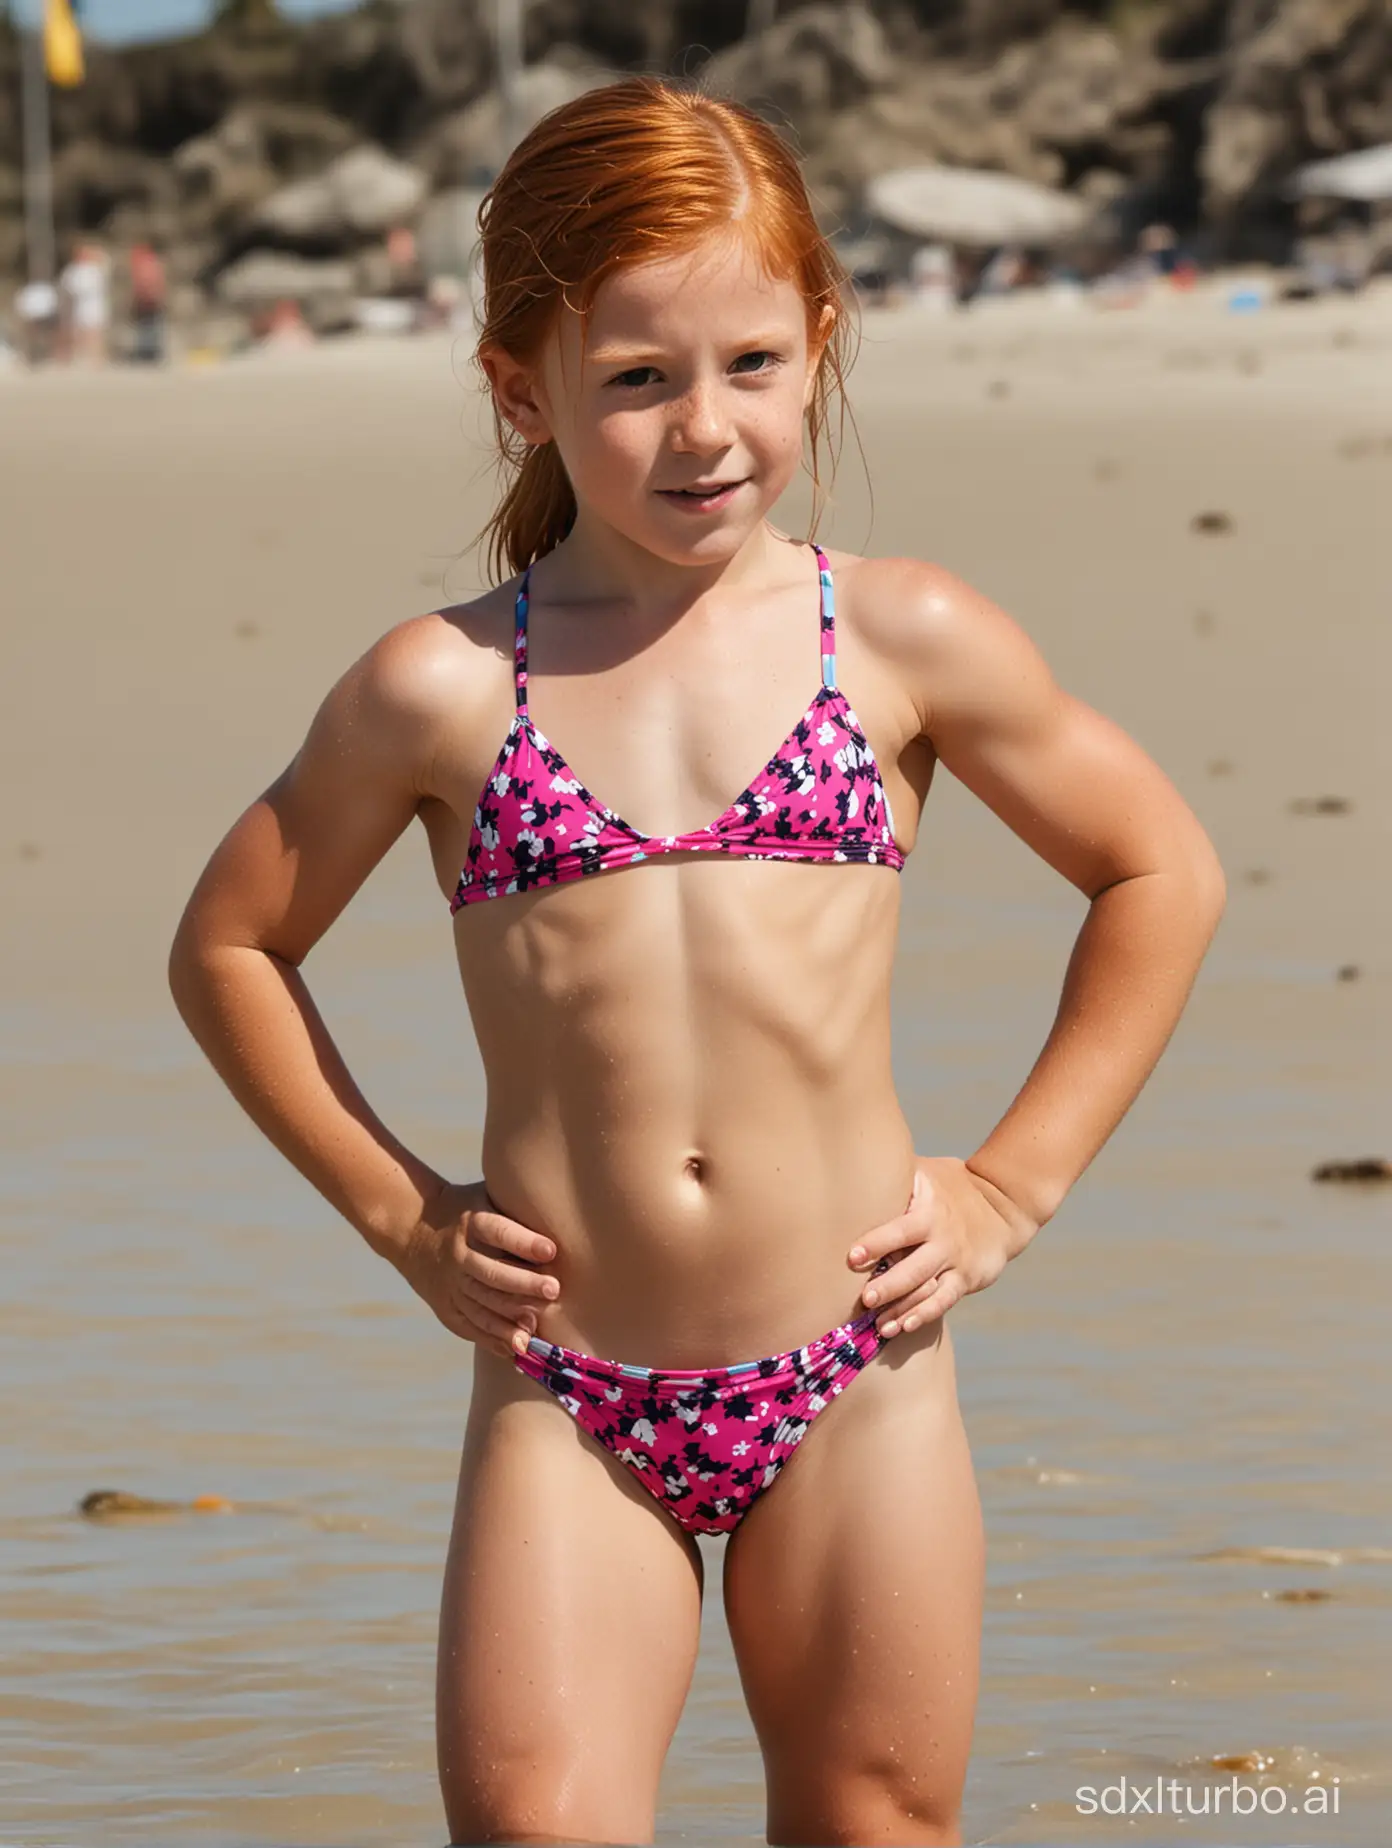 Muscular-7YearOld-Ginger-Girl-in-Vibrant-Beach-Attire